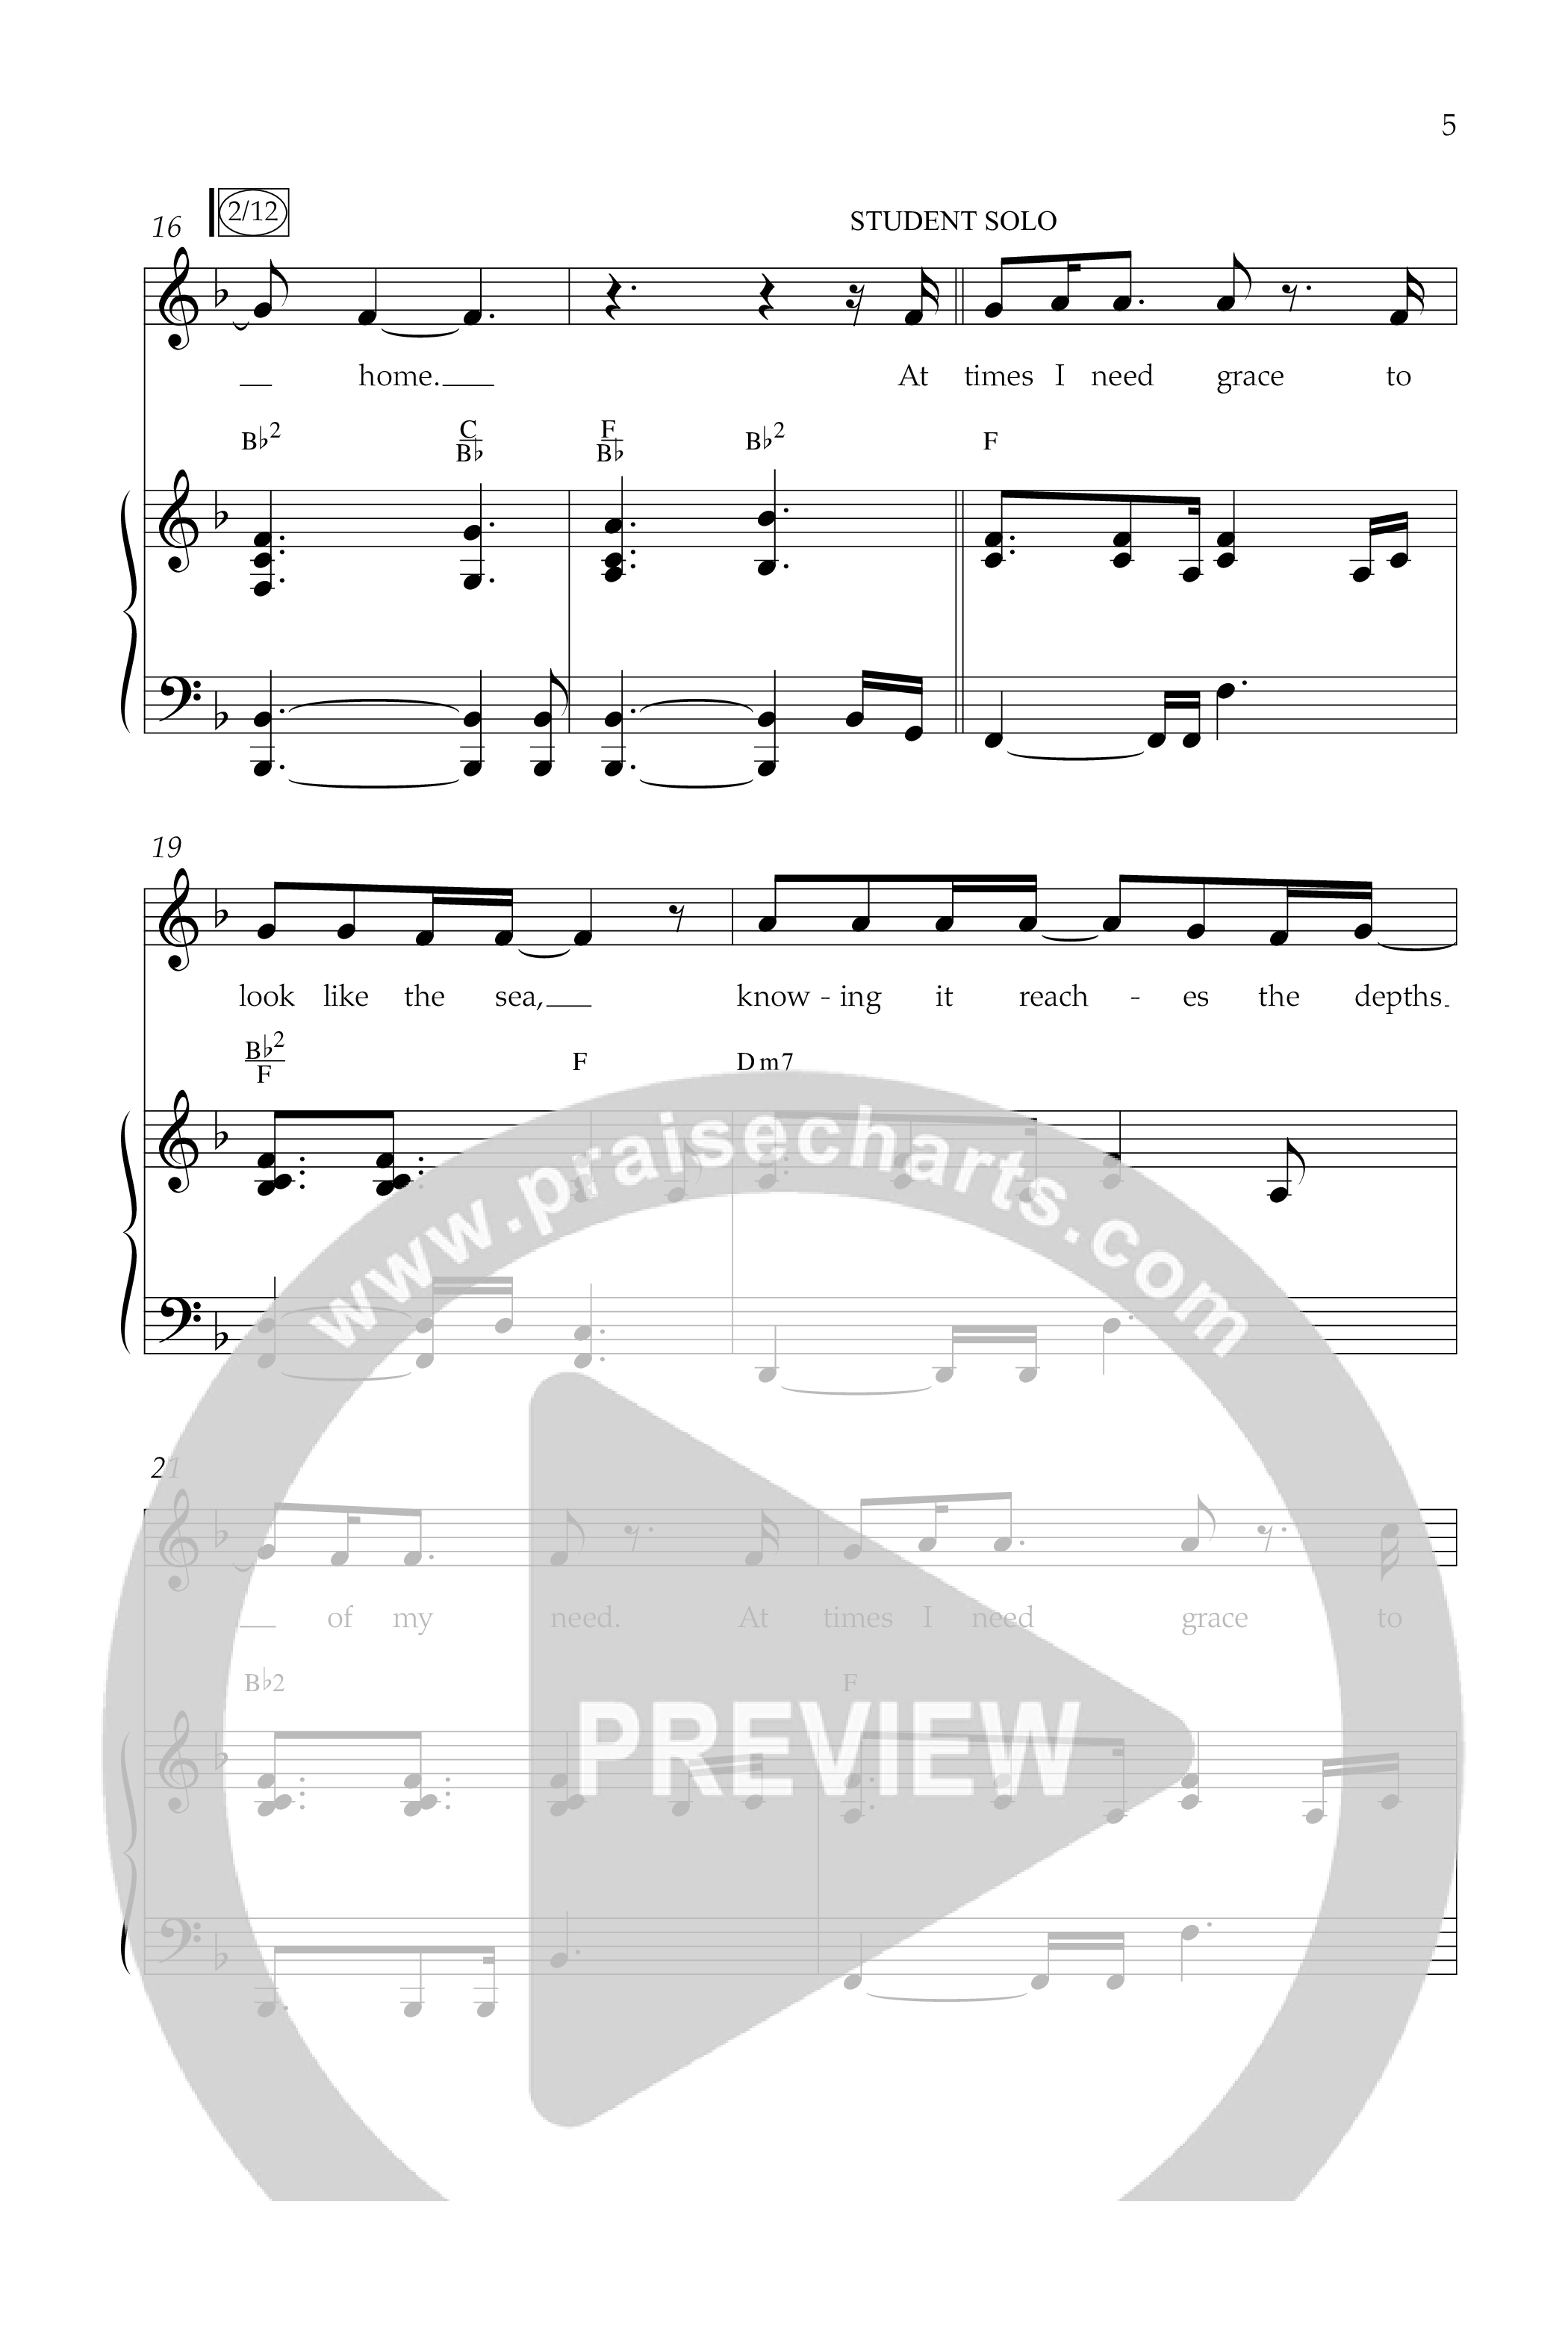 Grace Grace (Choral Anthem SATB) Anthem (SATB/Piano) (Lifeway Choral / Arr. John Bolin / Arr. Don Koch / Arr. Eric Belvin / Orch. Daniel Semsen)